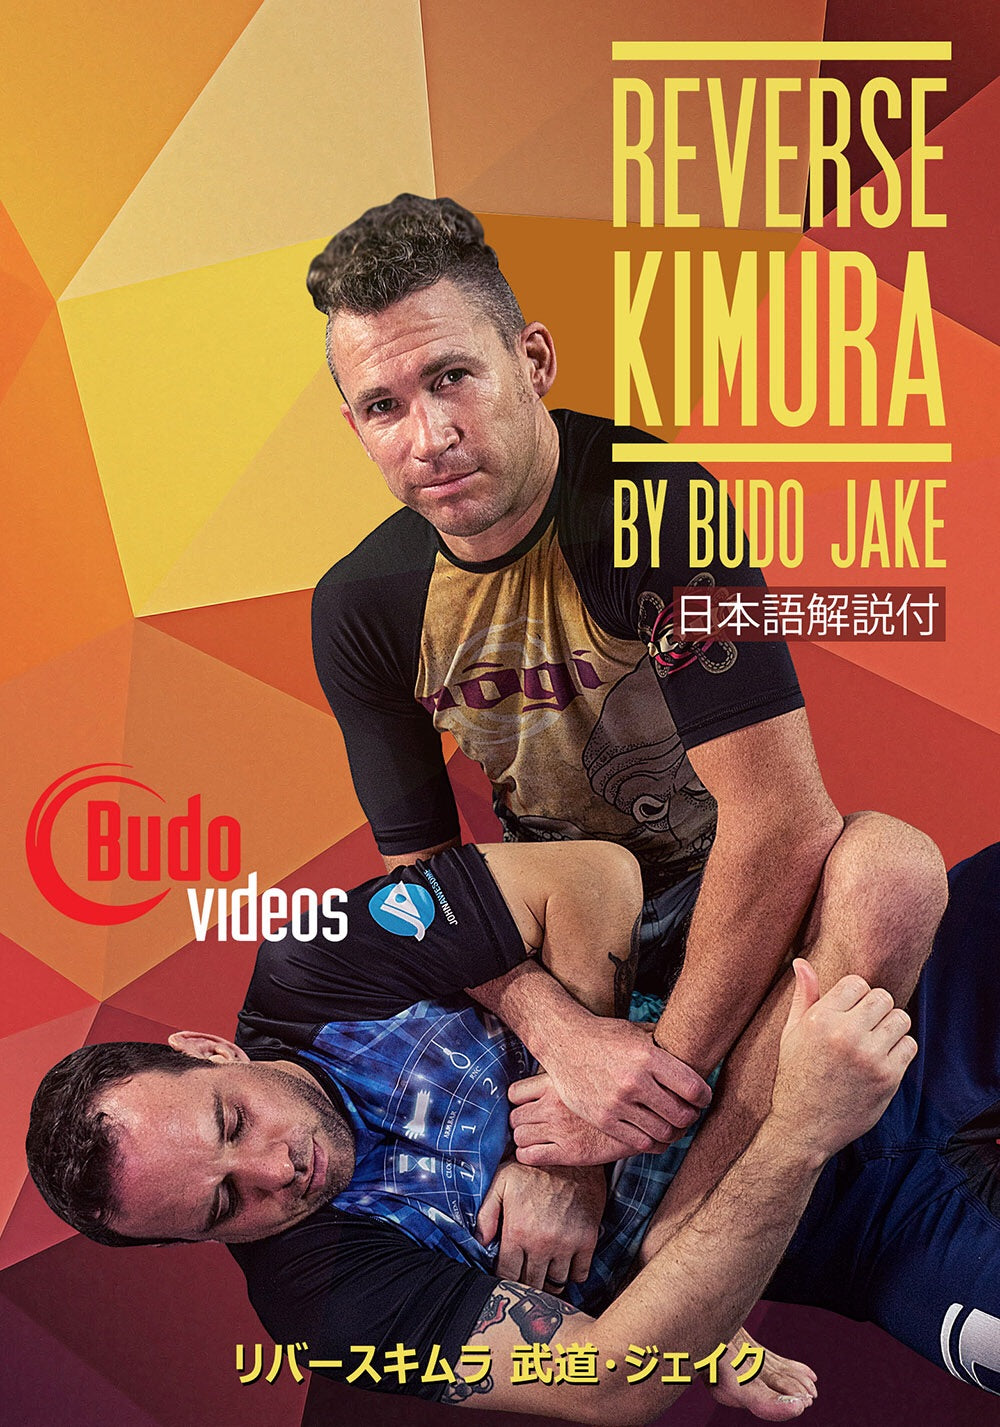 The Reverse Kimura DVD or Blu-ray by Budo Jake - Budovideos Inc